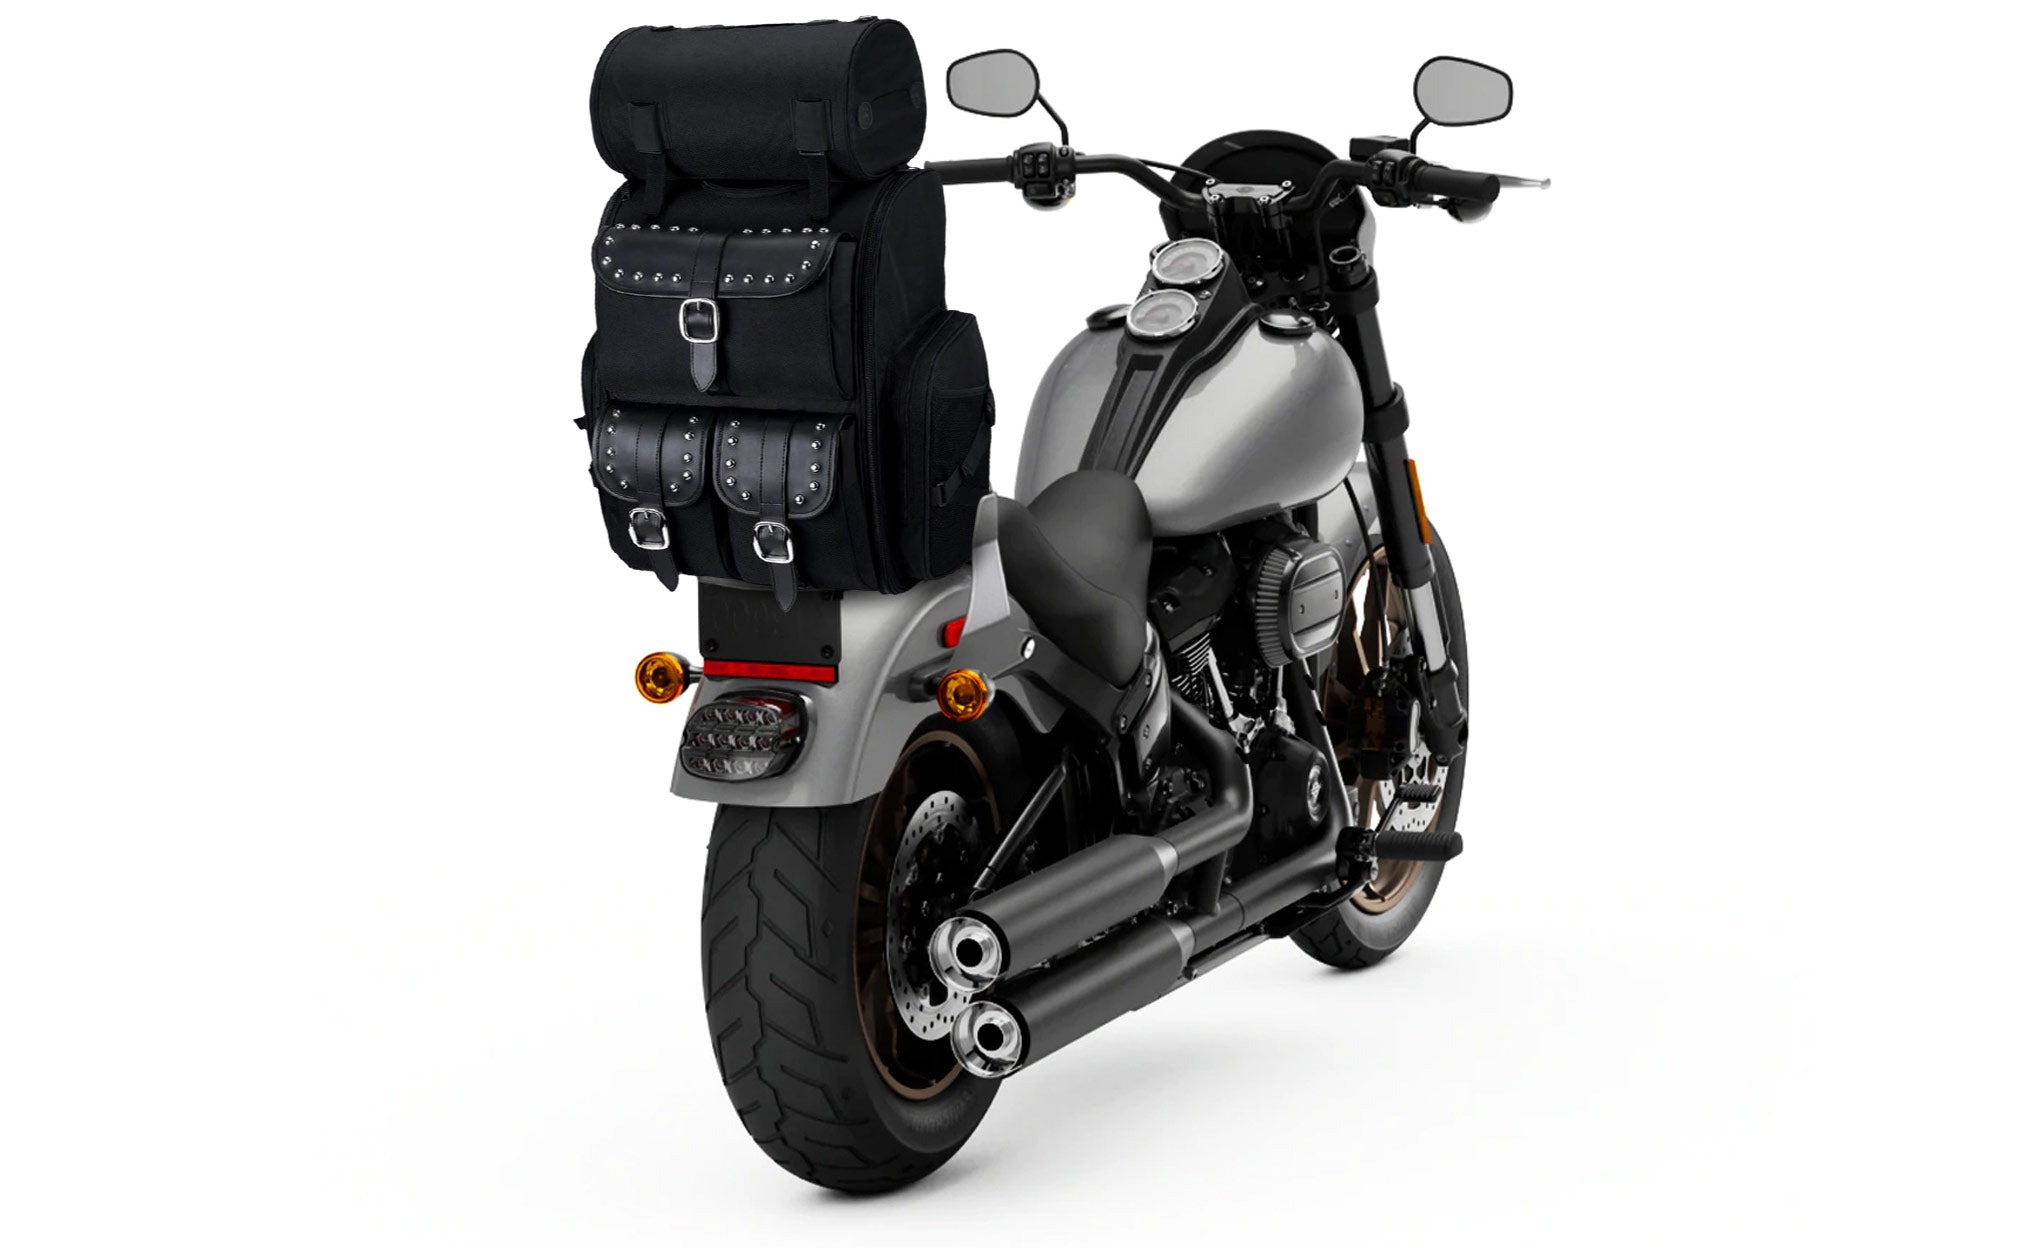 Viking Highway Extra Large Studded Suzuki Motorcycle Tail Bag Bag on Bike View @expand